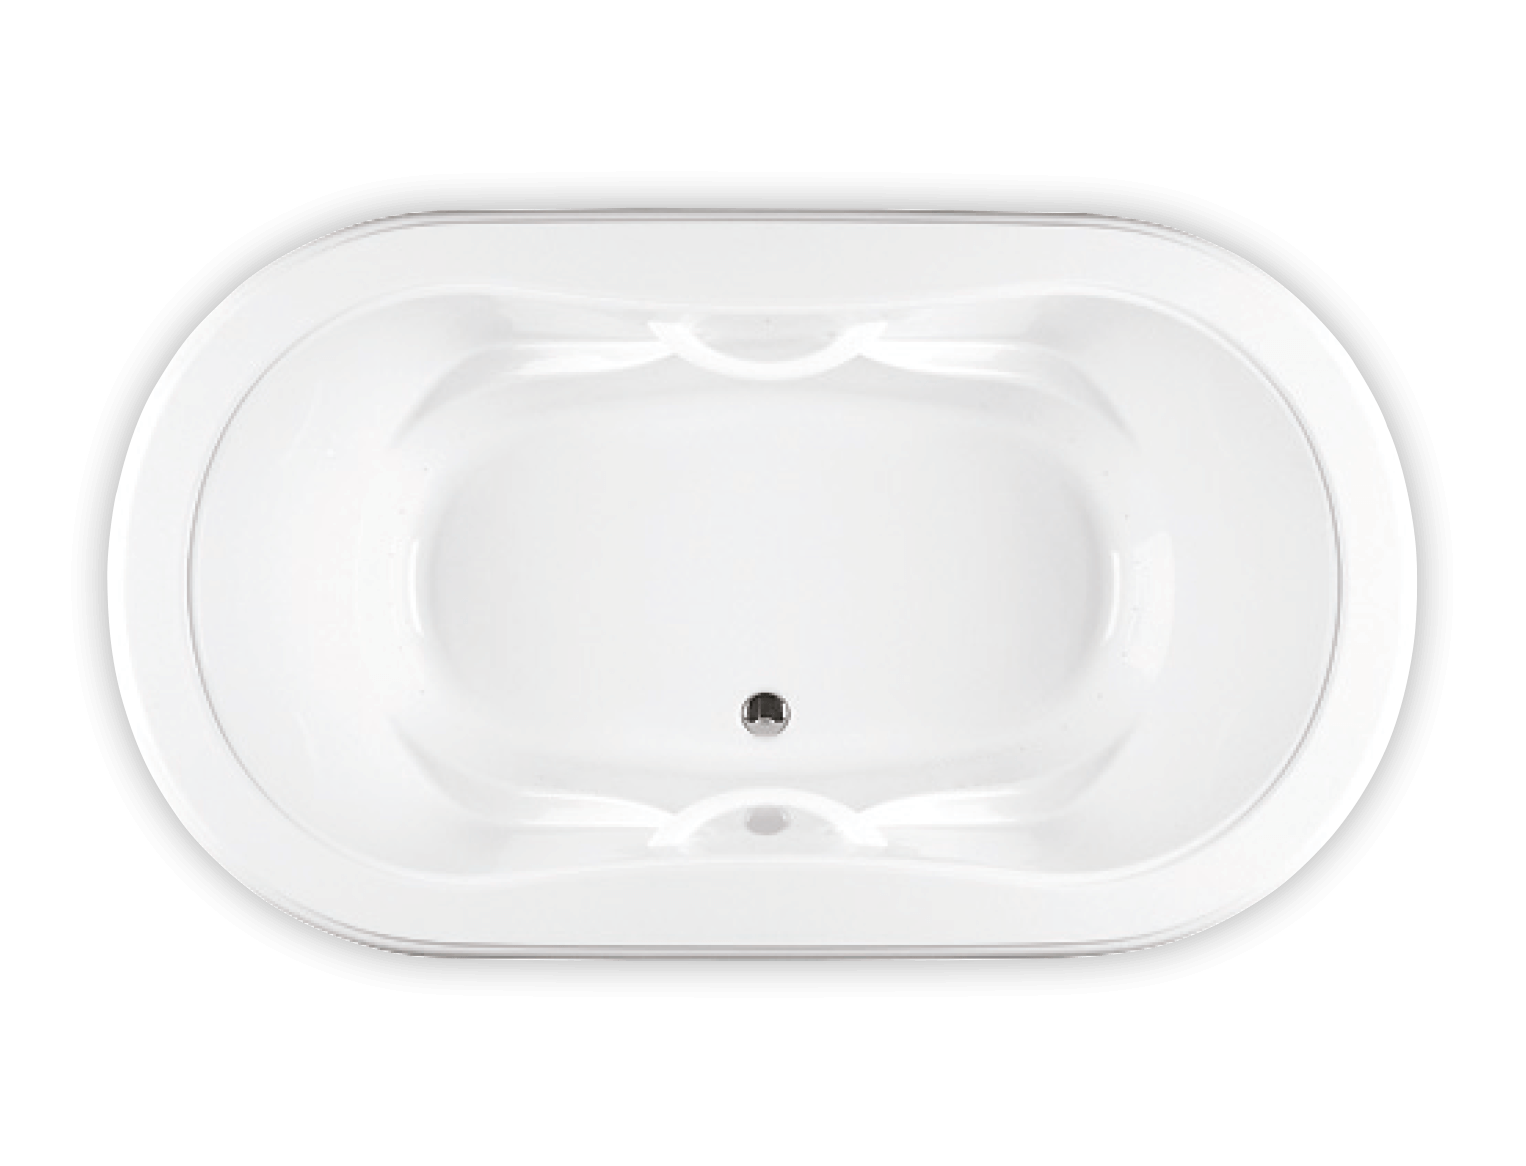 Bainultra Elegancia 6642 alcove drop-in air jet bathtub for your Victorian bathroom